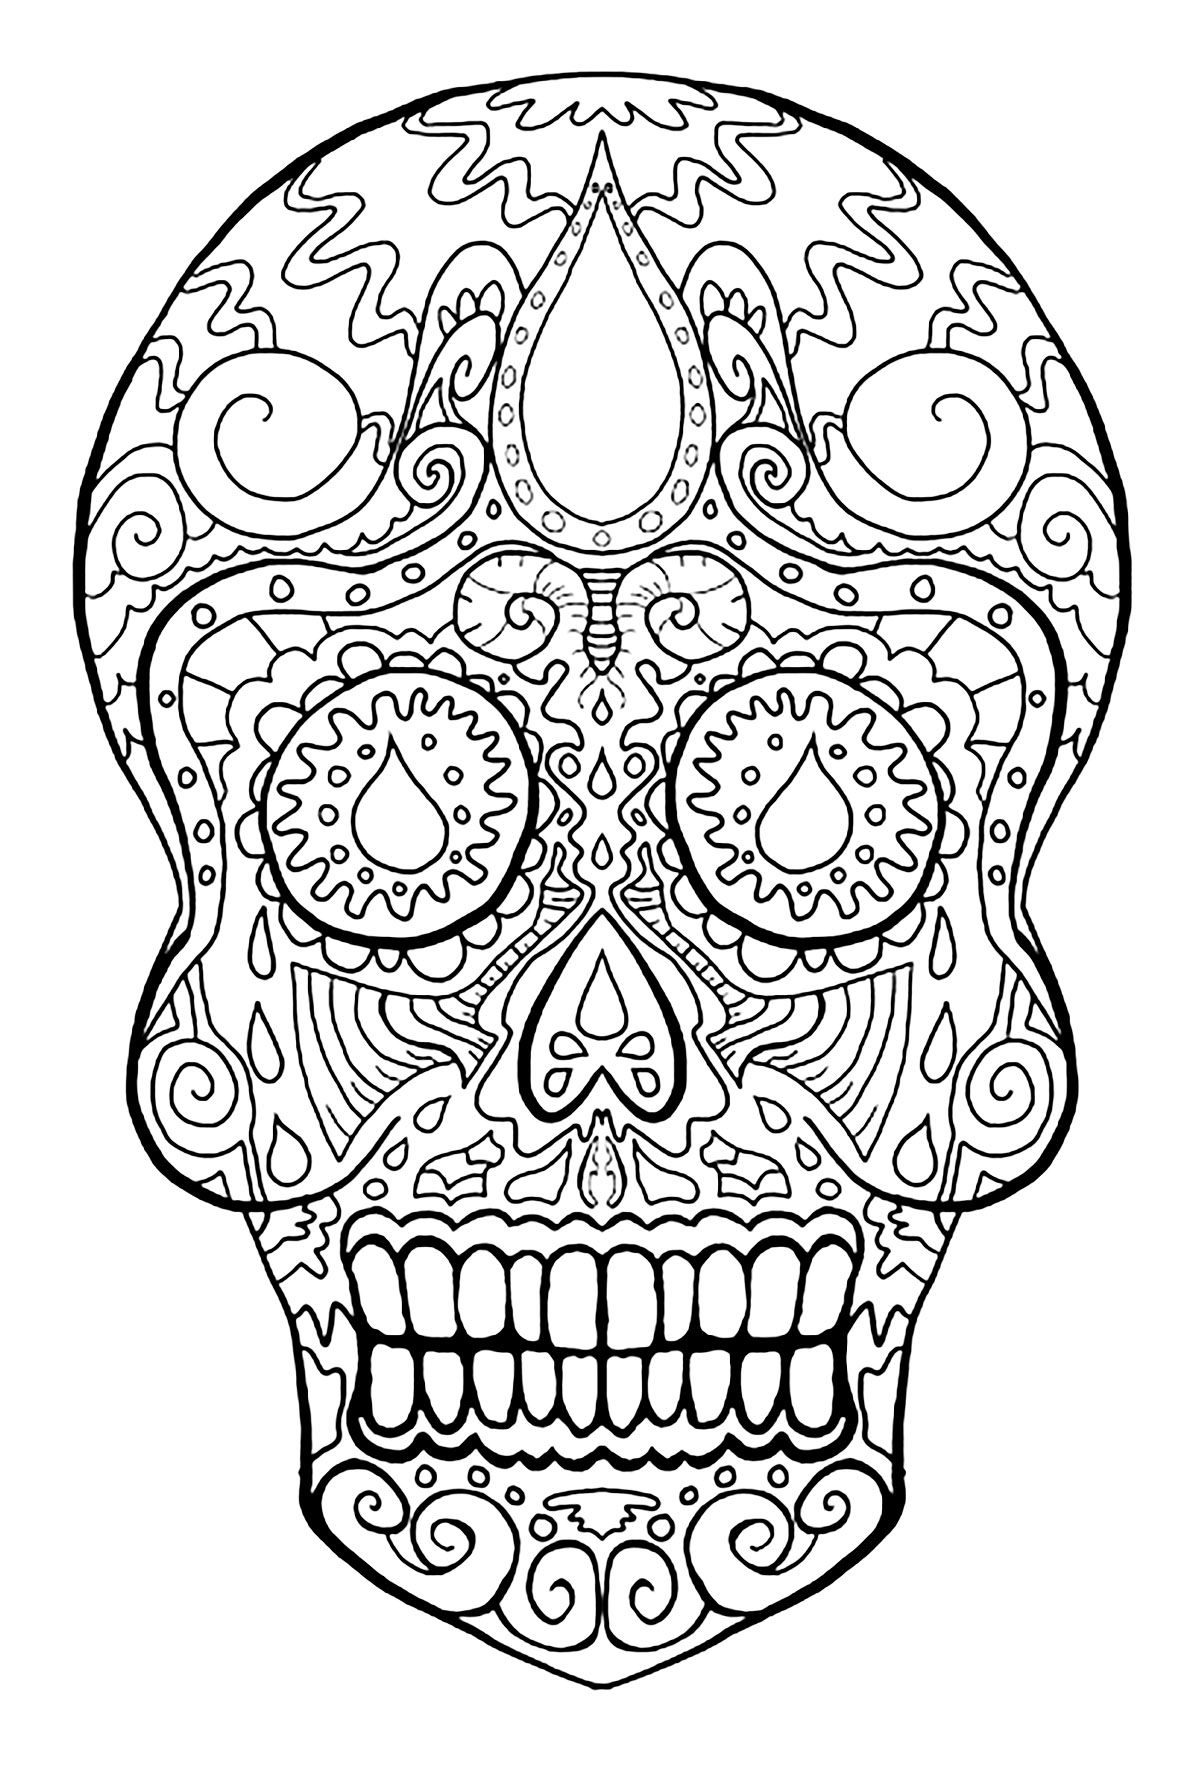 Skull from El Dia de lors muertos celebration